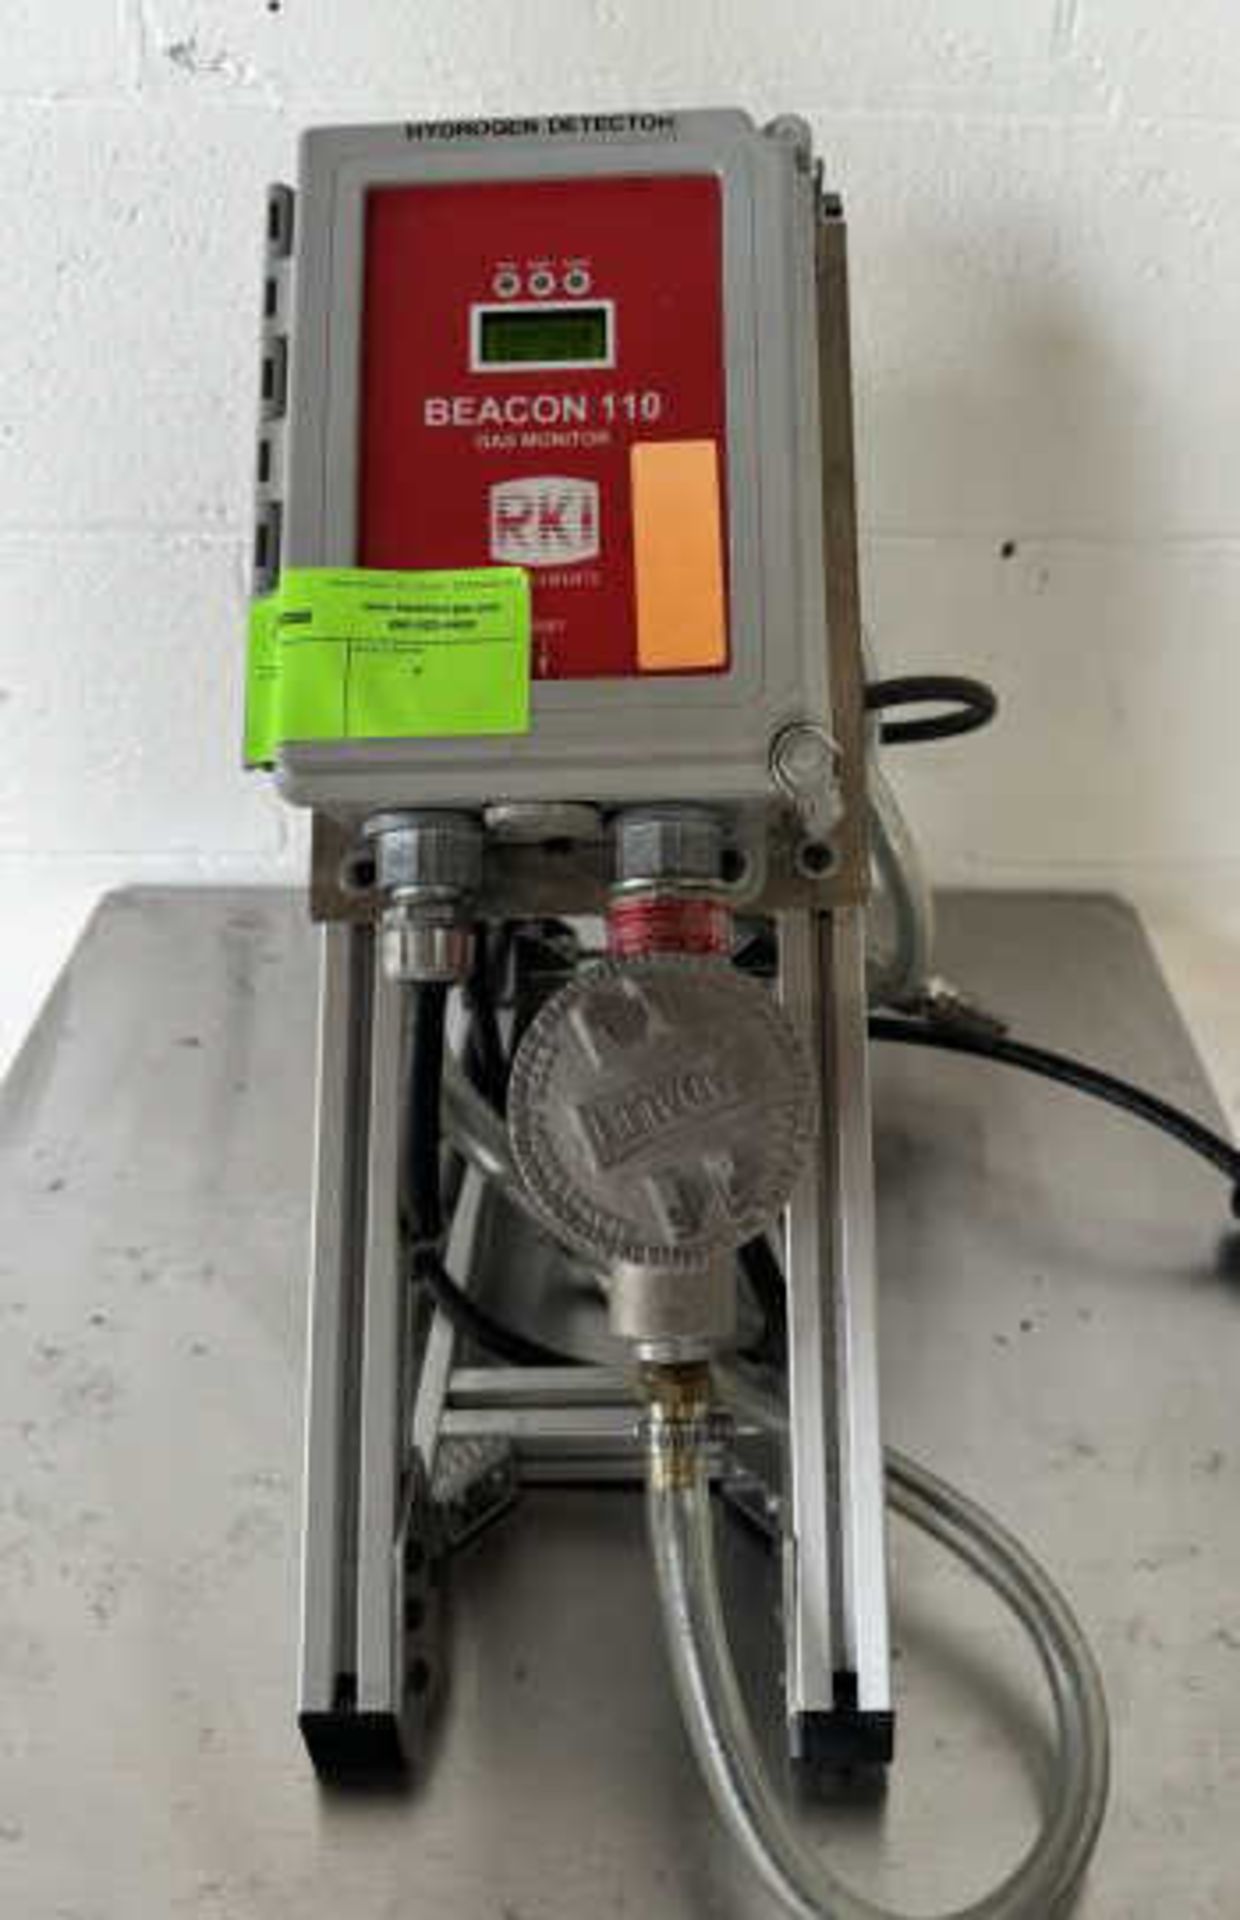 Beacon 110 Gas Monitor RKI Instruments